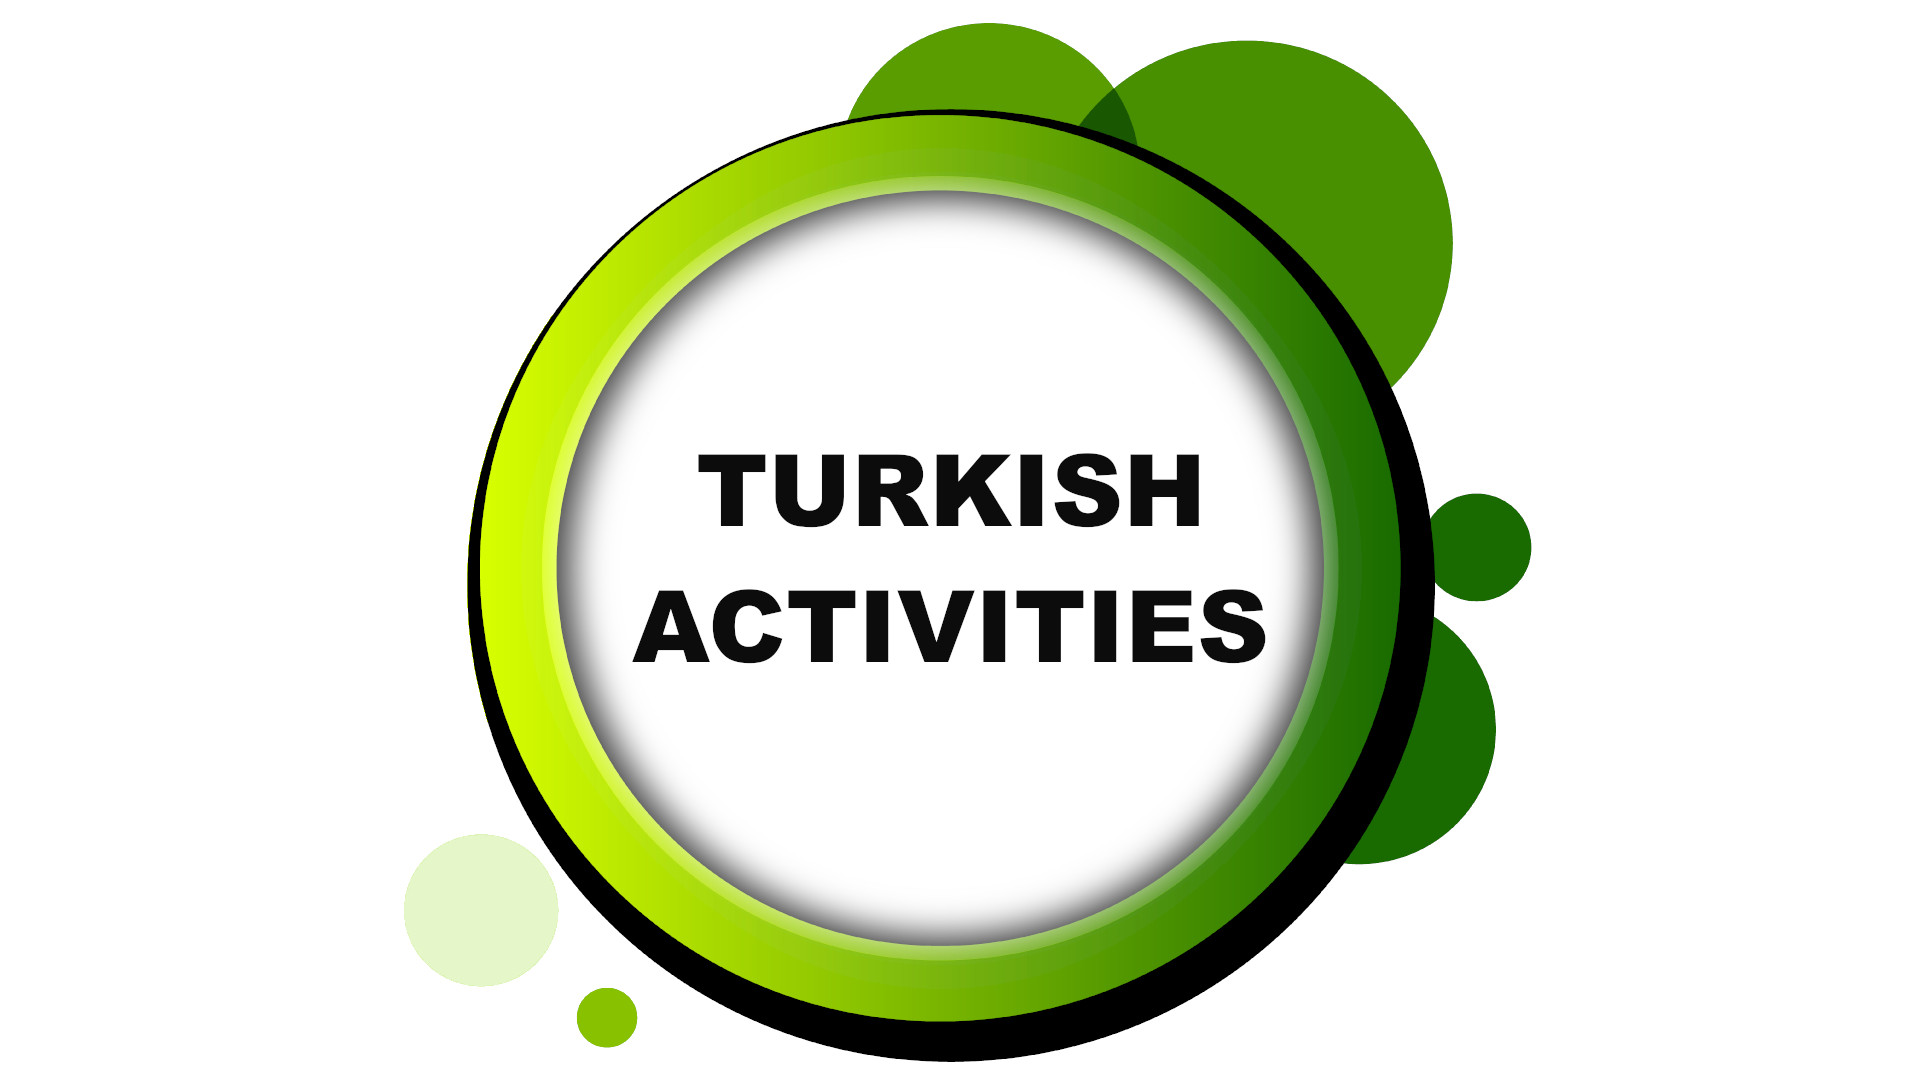 TURKISH ACTIVITIES